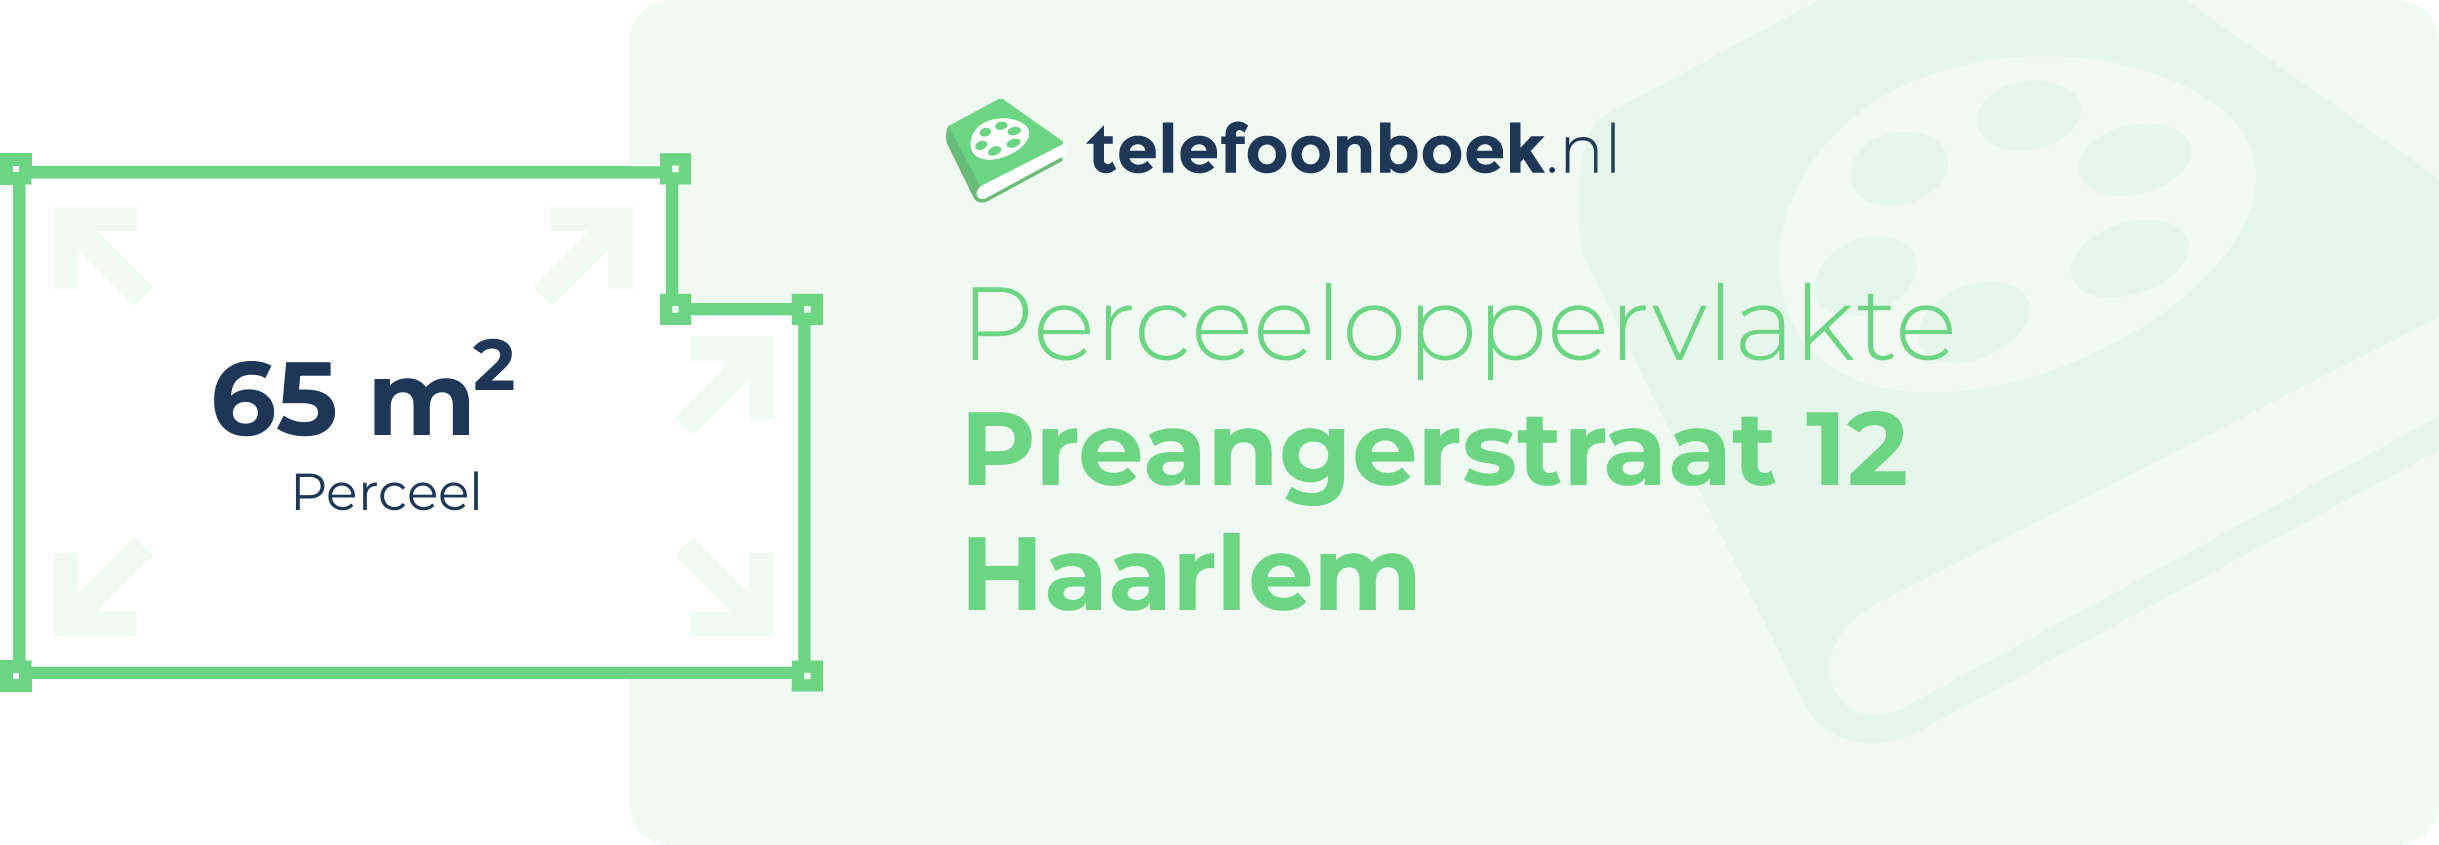 Perceeloppervlakte Preangerstraat 12 Haarlem